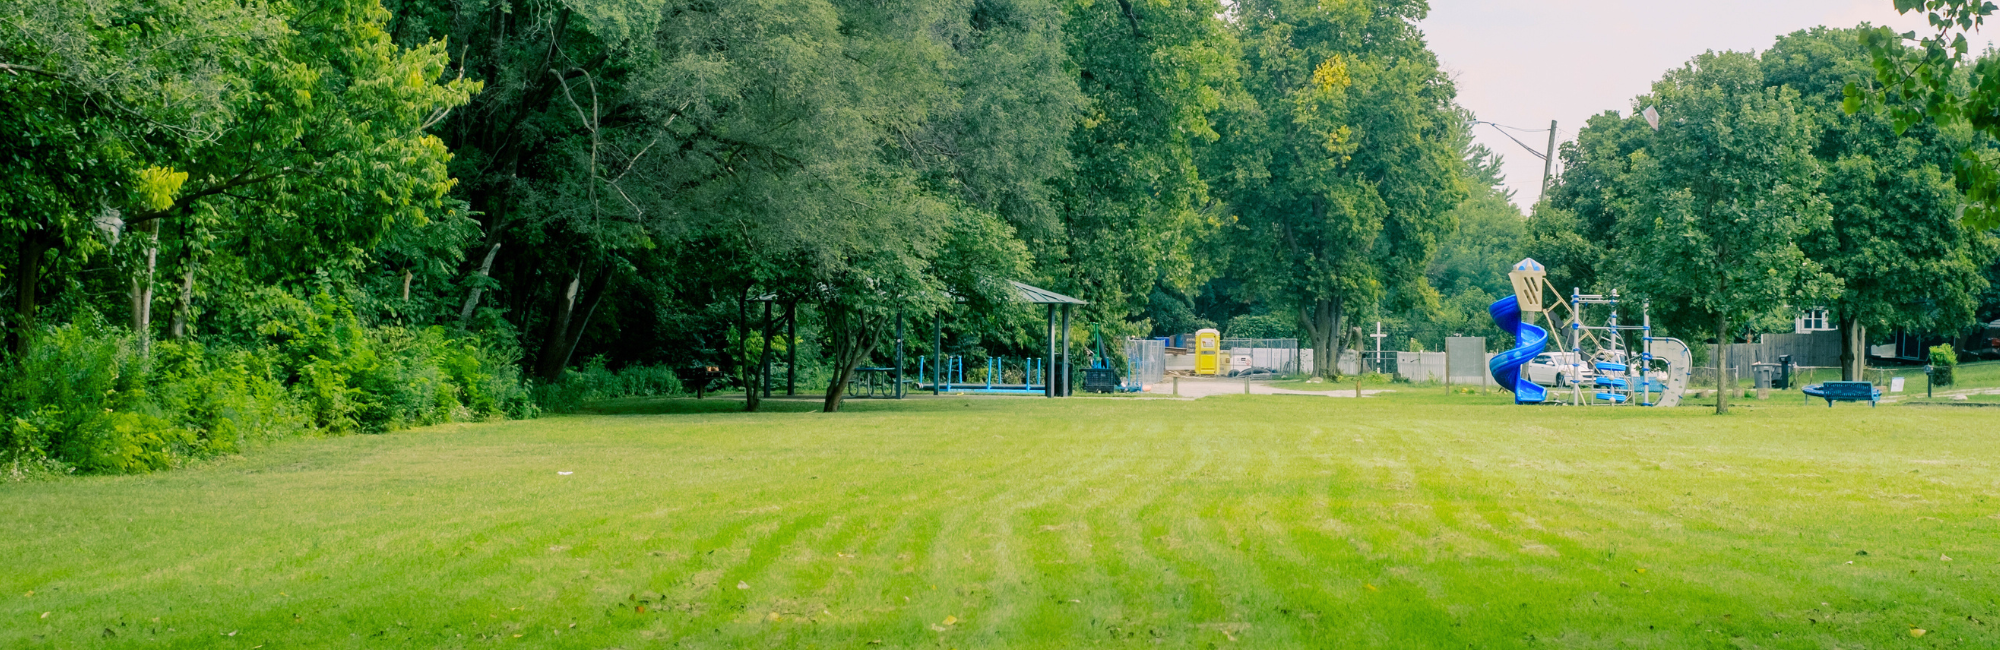 Emhardt Park